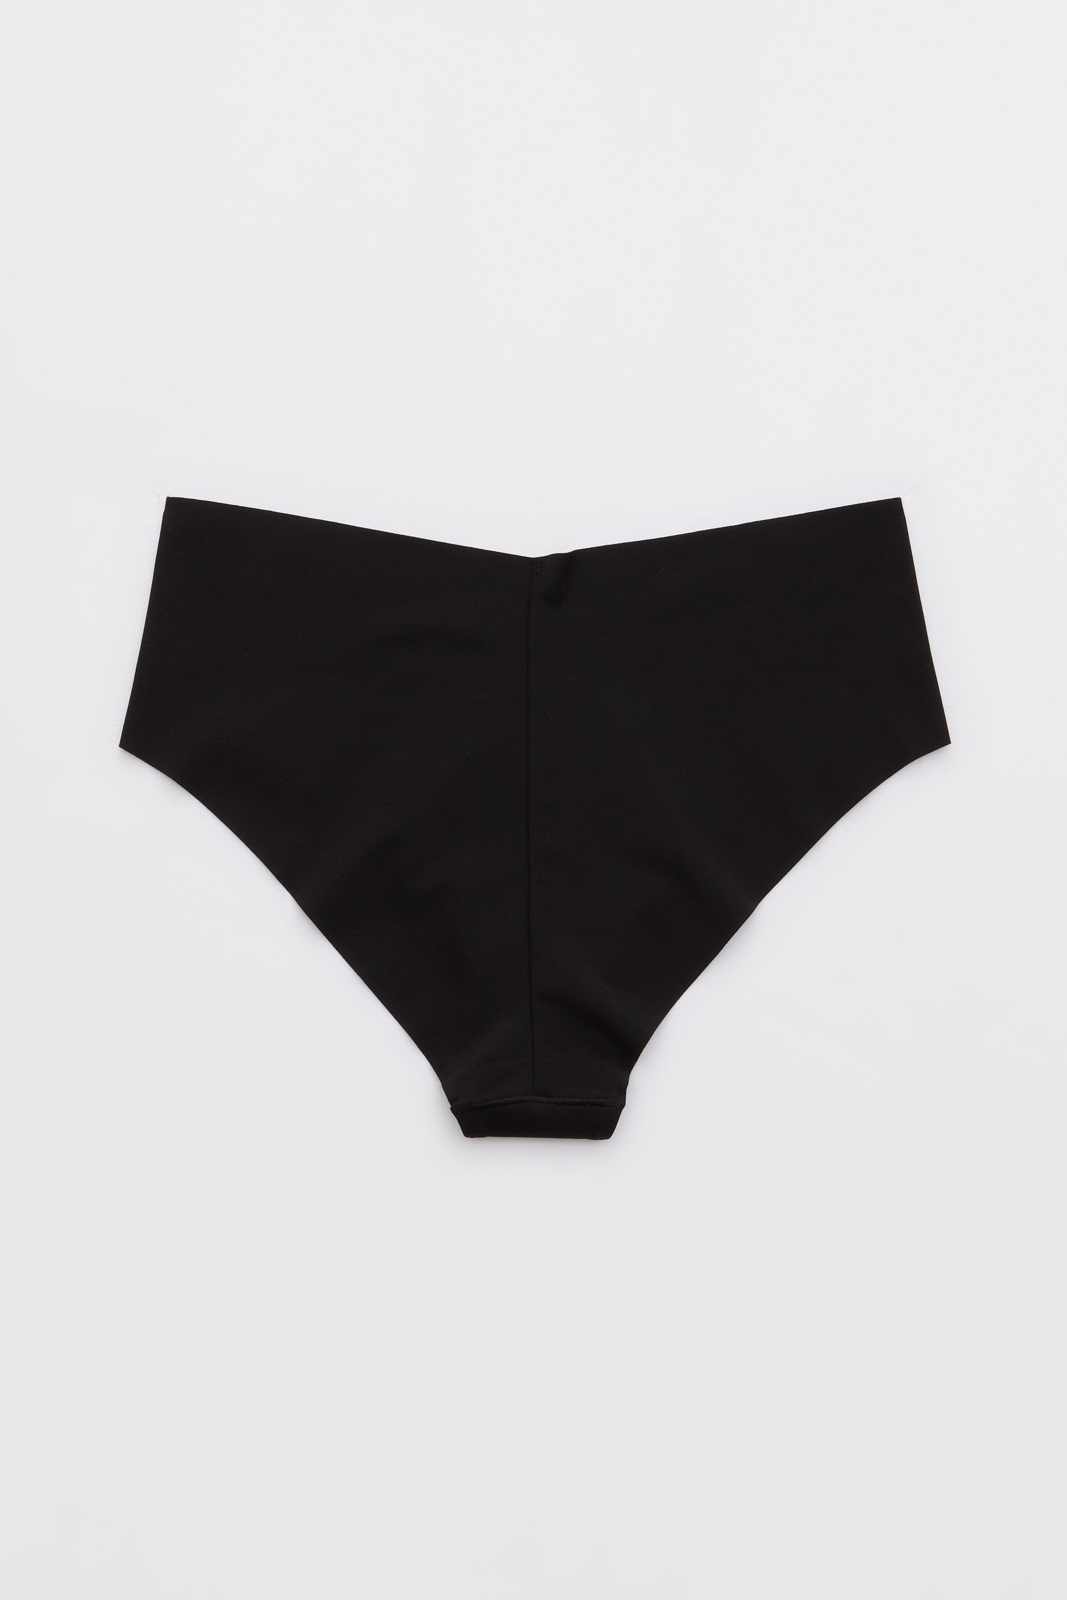 American Eagle SMOOTHEZ Microfiber Mesh Thong Underwear